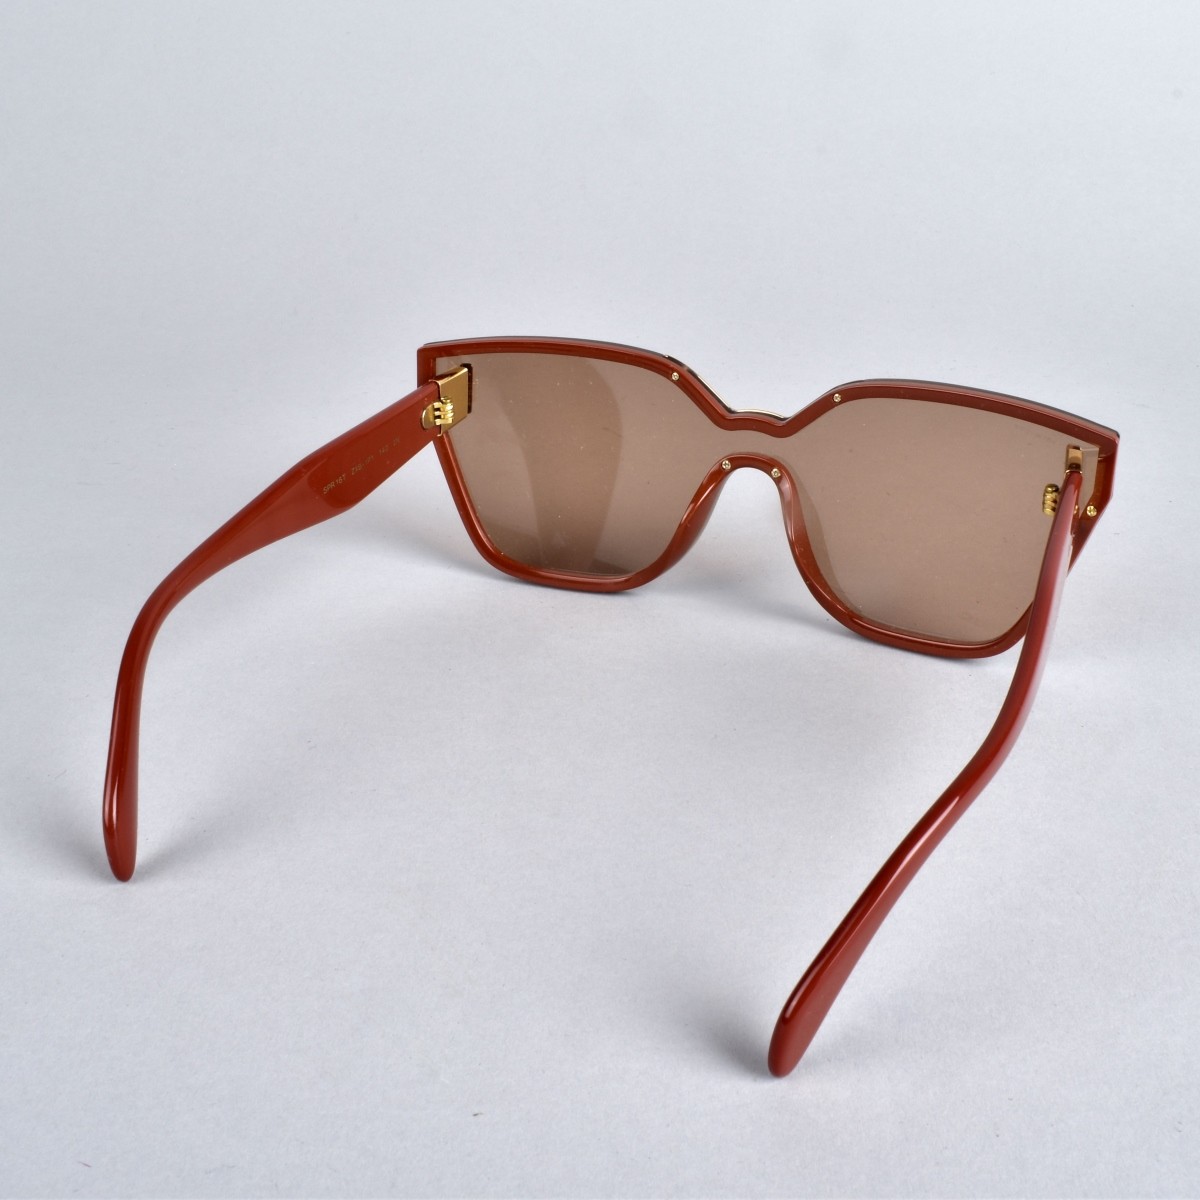 Prada Sunglasses in Original Box